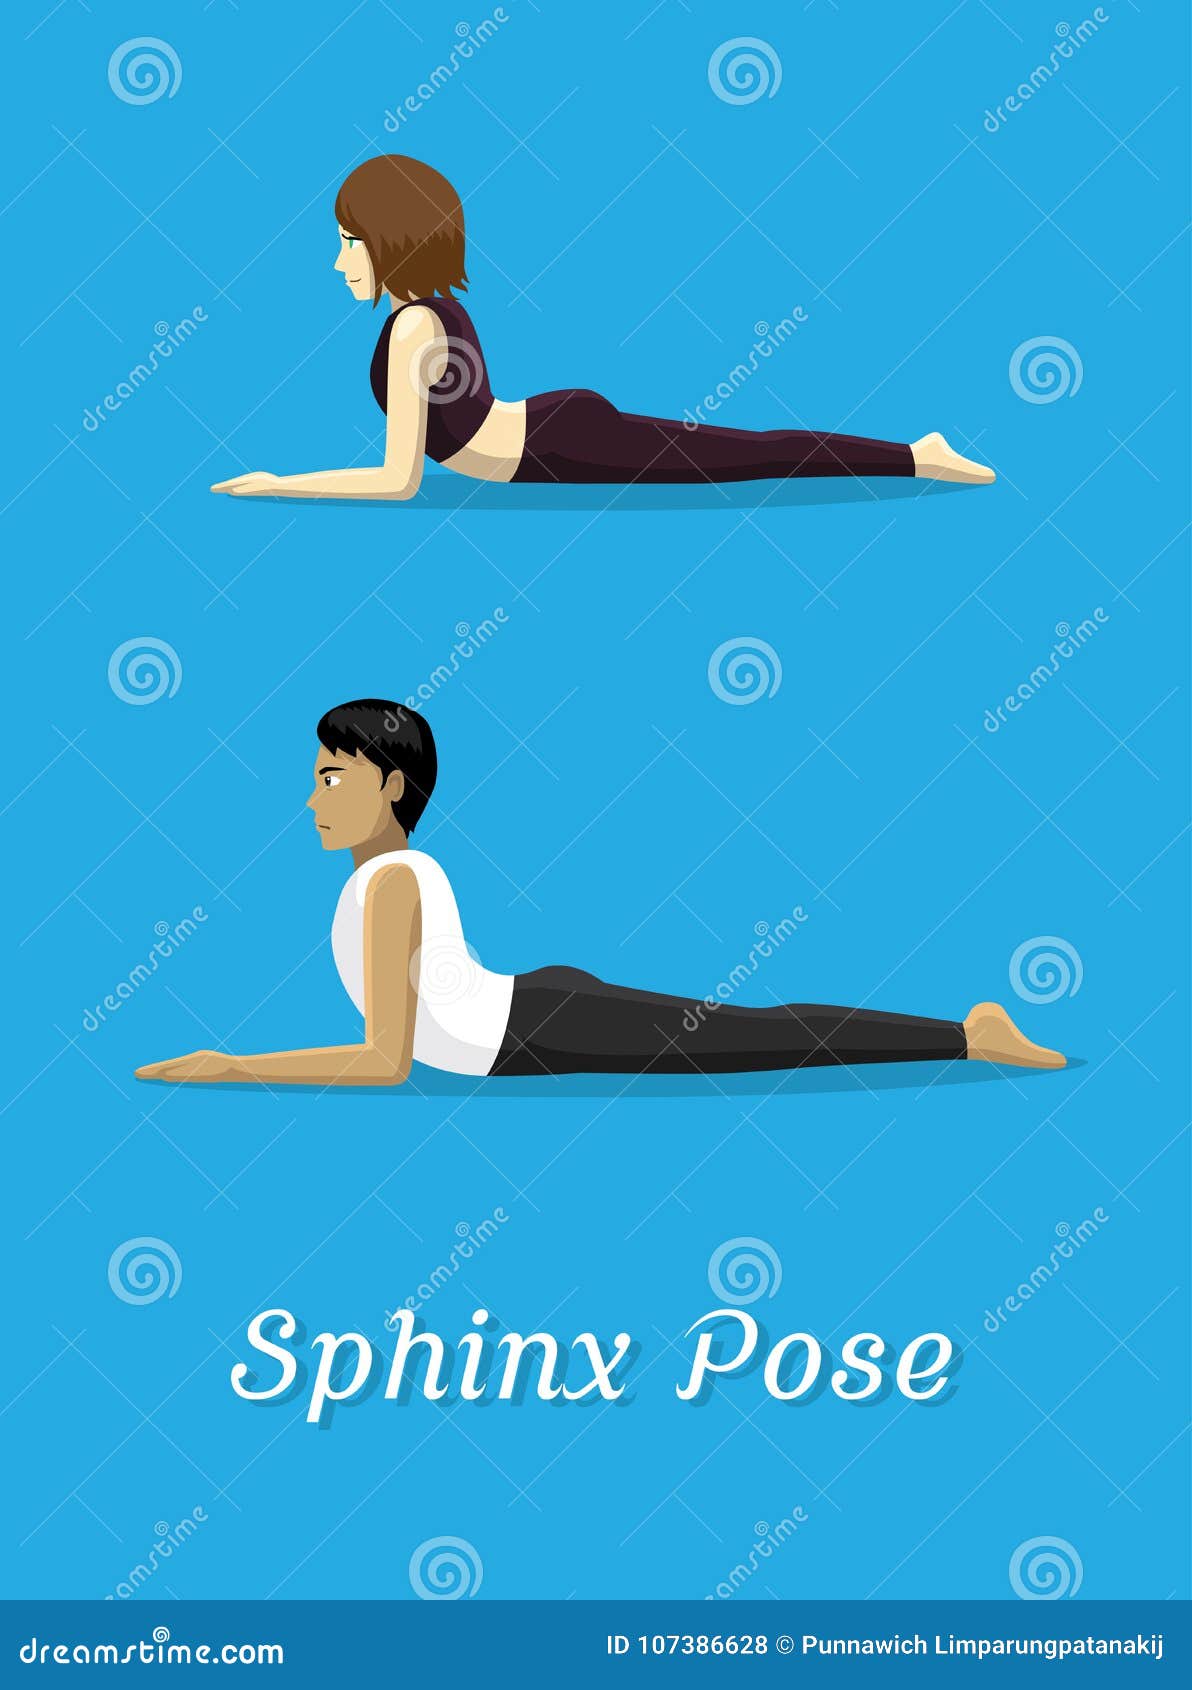 How to Do Sphinx Pose in Yoga – EverydayYoga.com